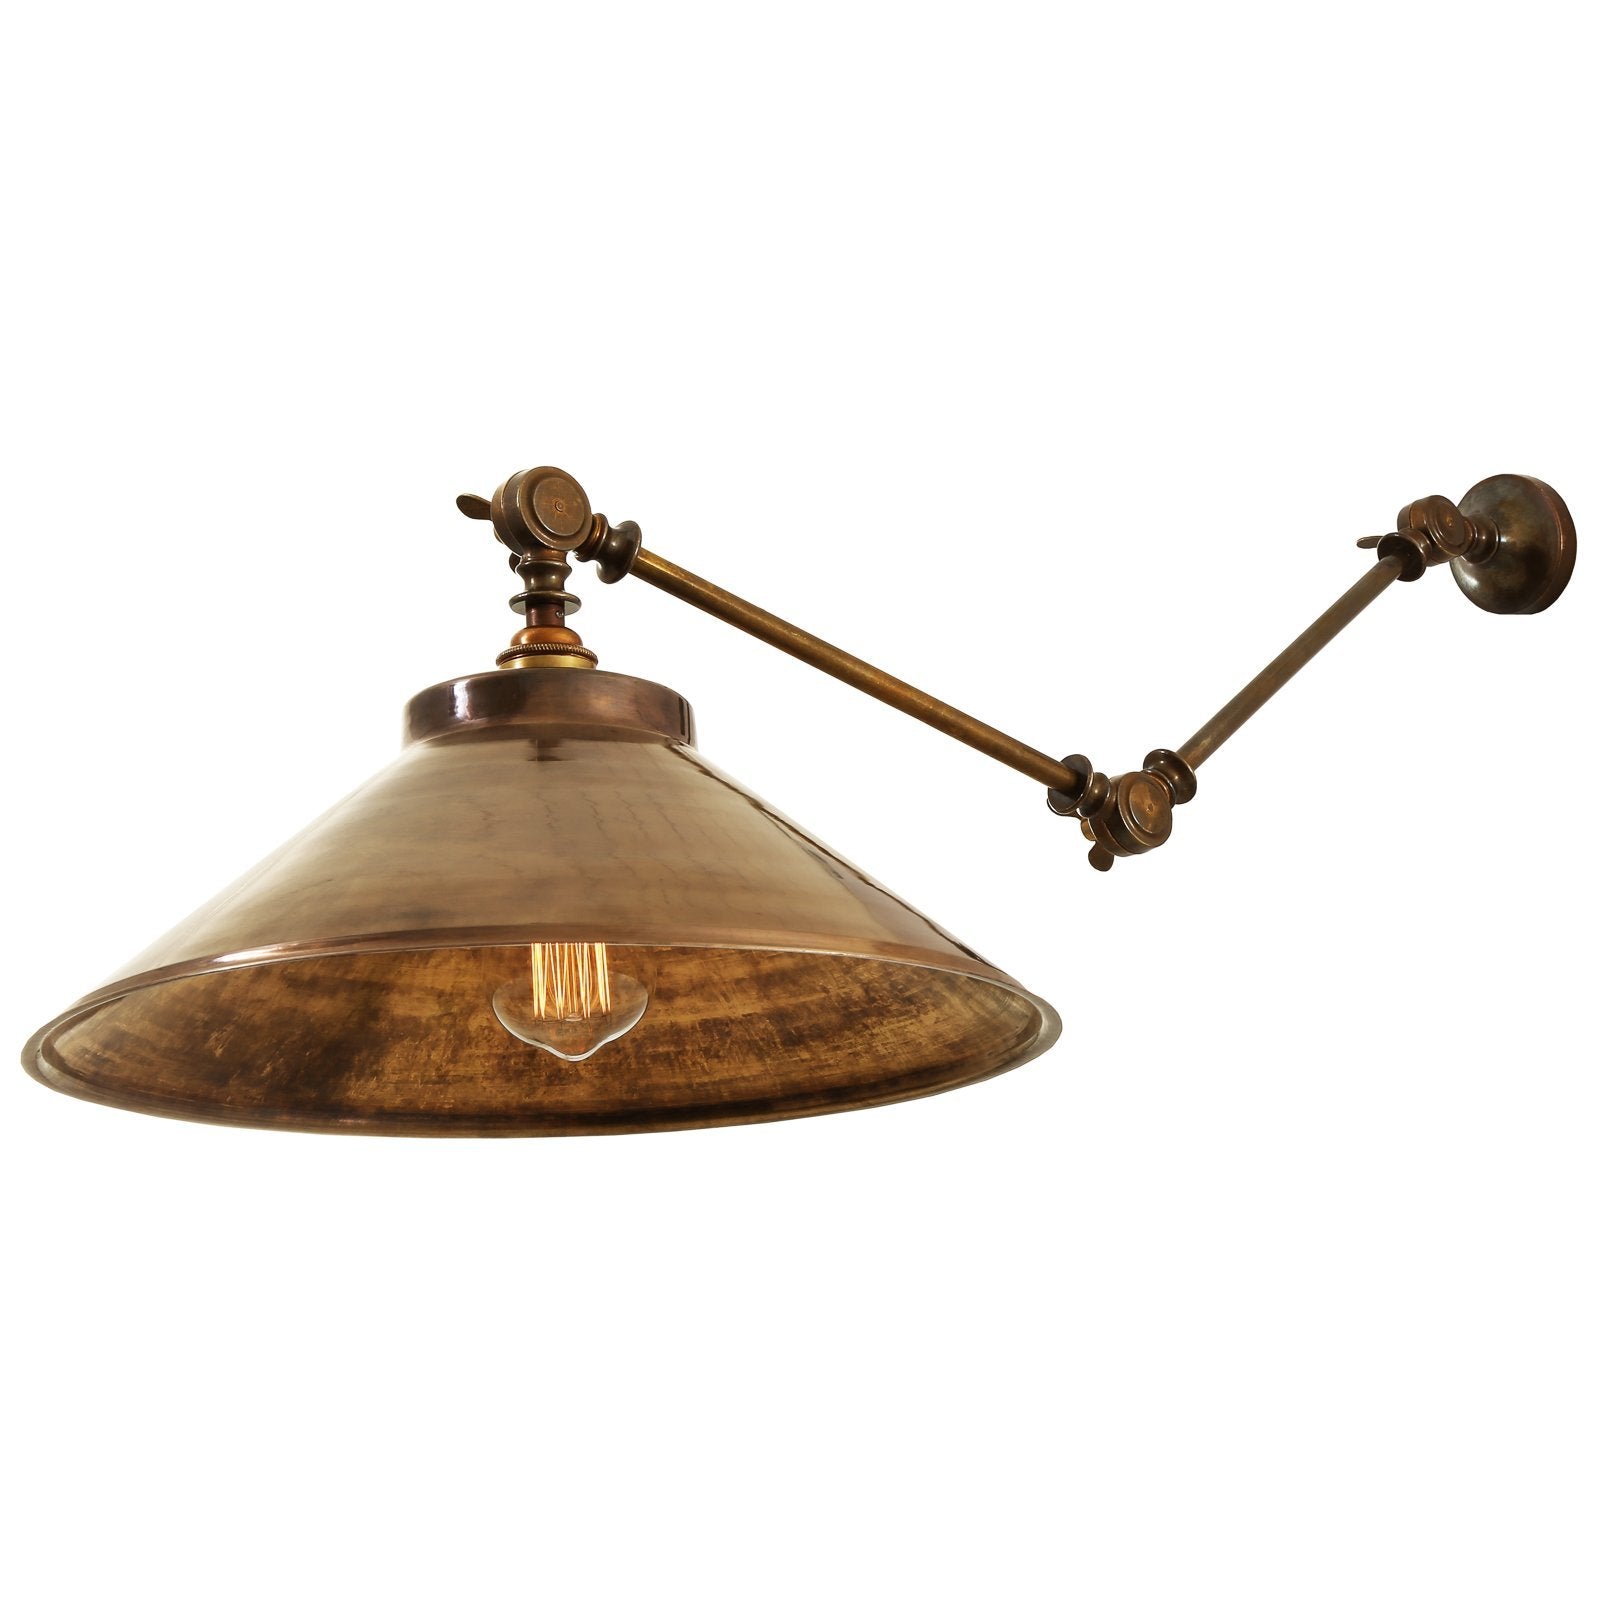 BAKU Handmade adjustable brass wall lamp By Mullan Lighting